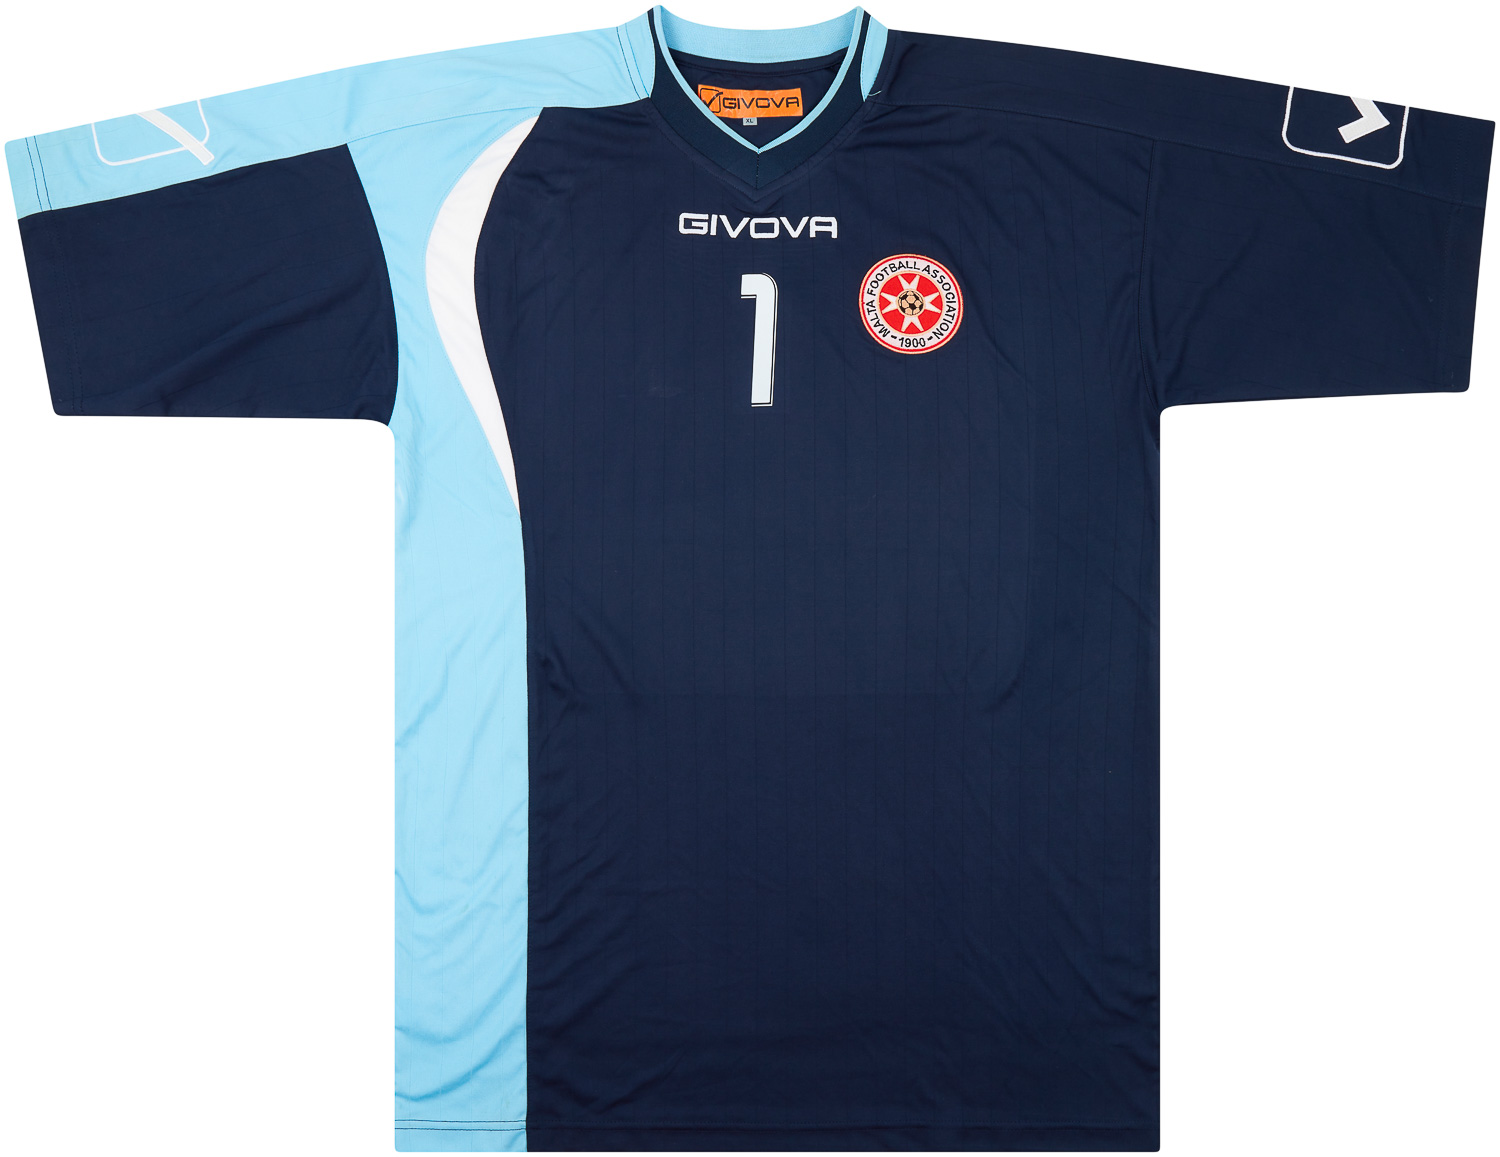 2013-14 Malta Match Issue GK Shirt #1